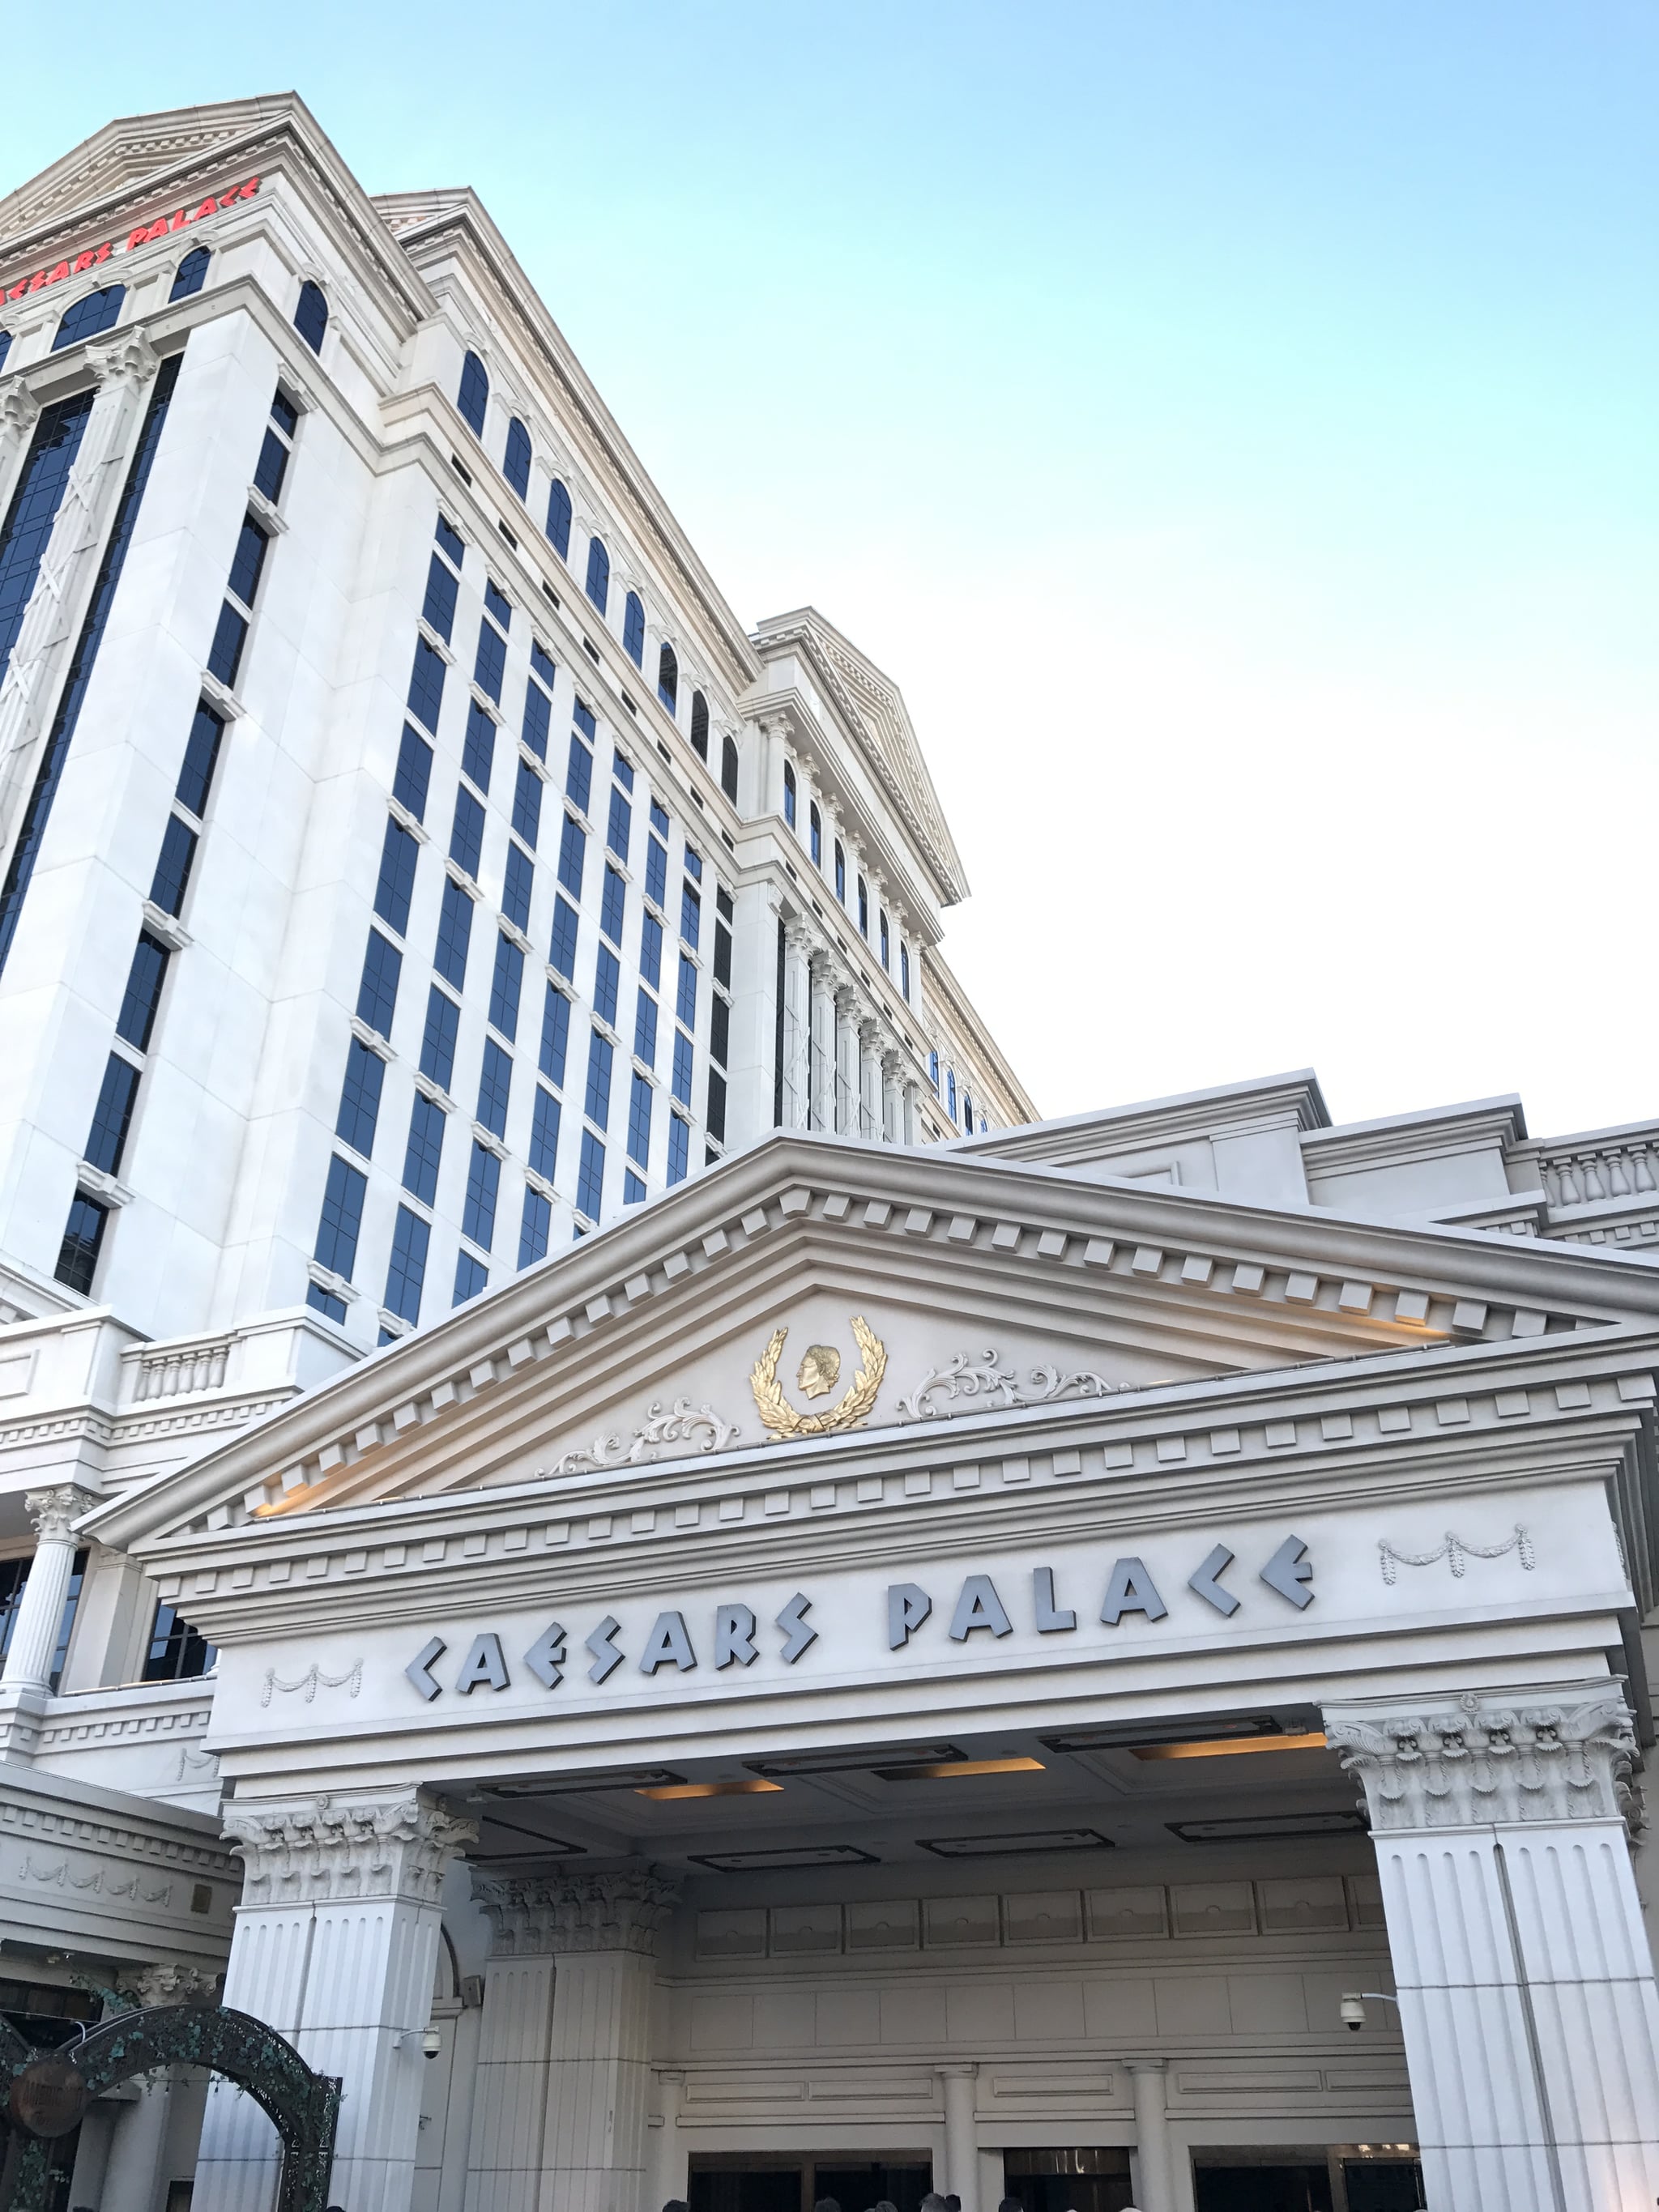 Gordon Ramsay Hell's Kitchen - Caesars Palace Las Vegas